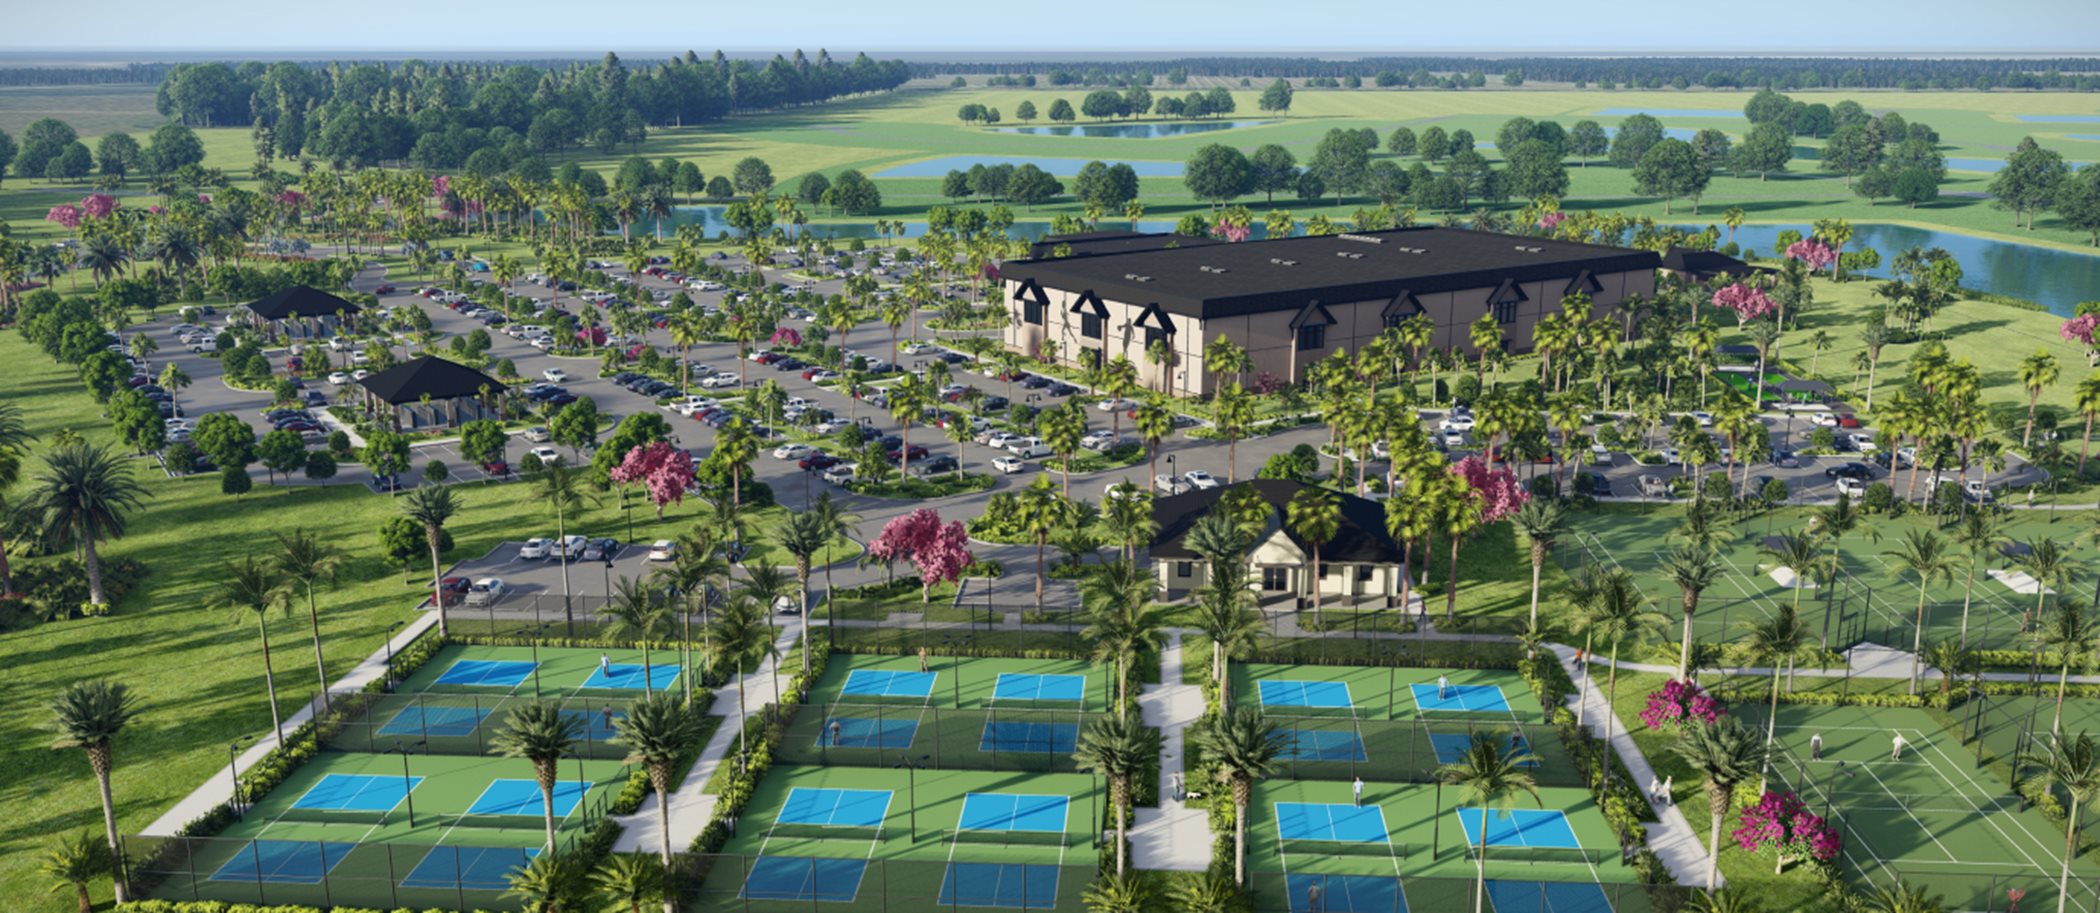 Verdana Village amenity tennis courts